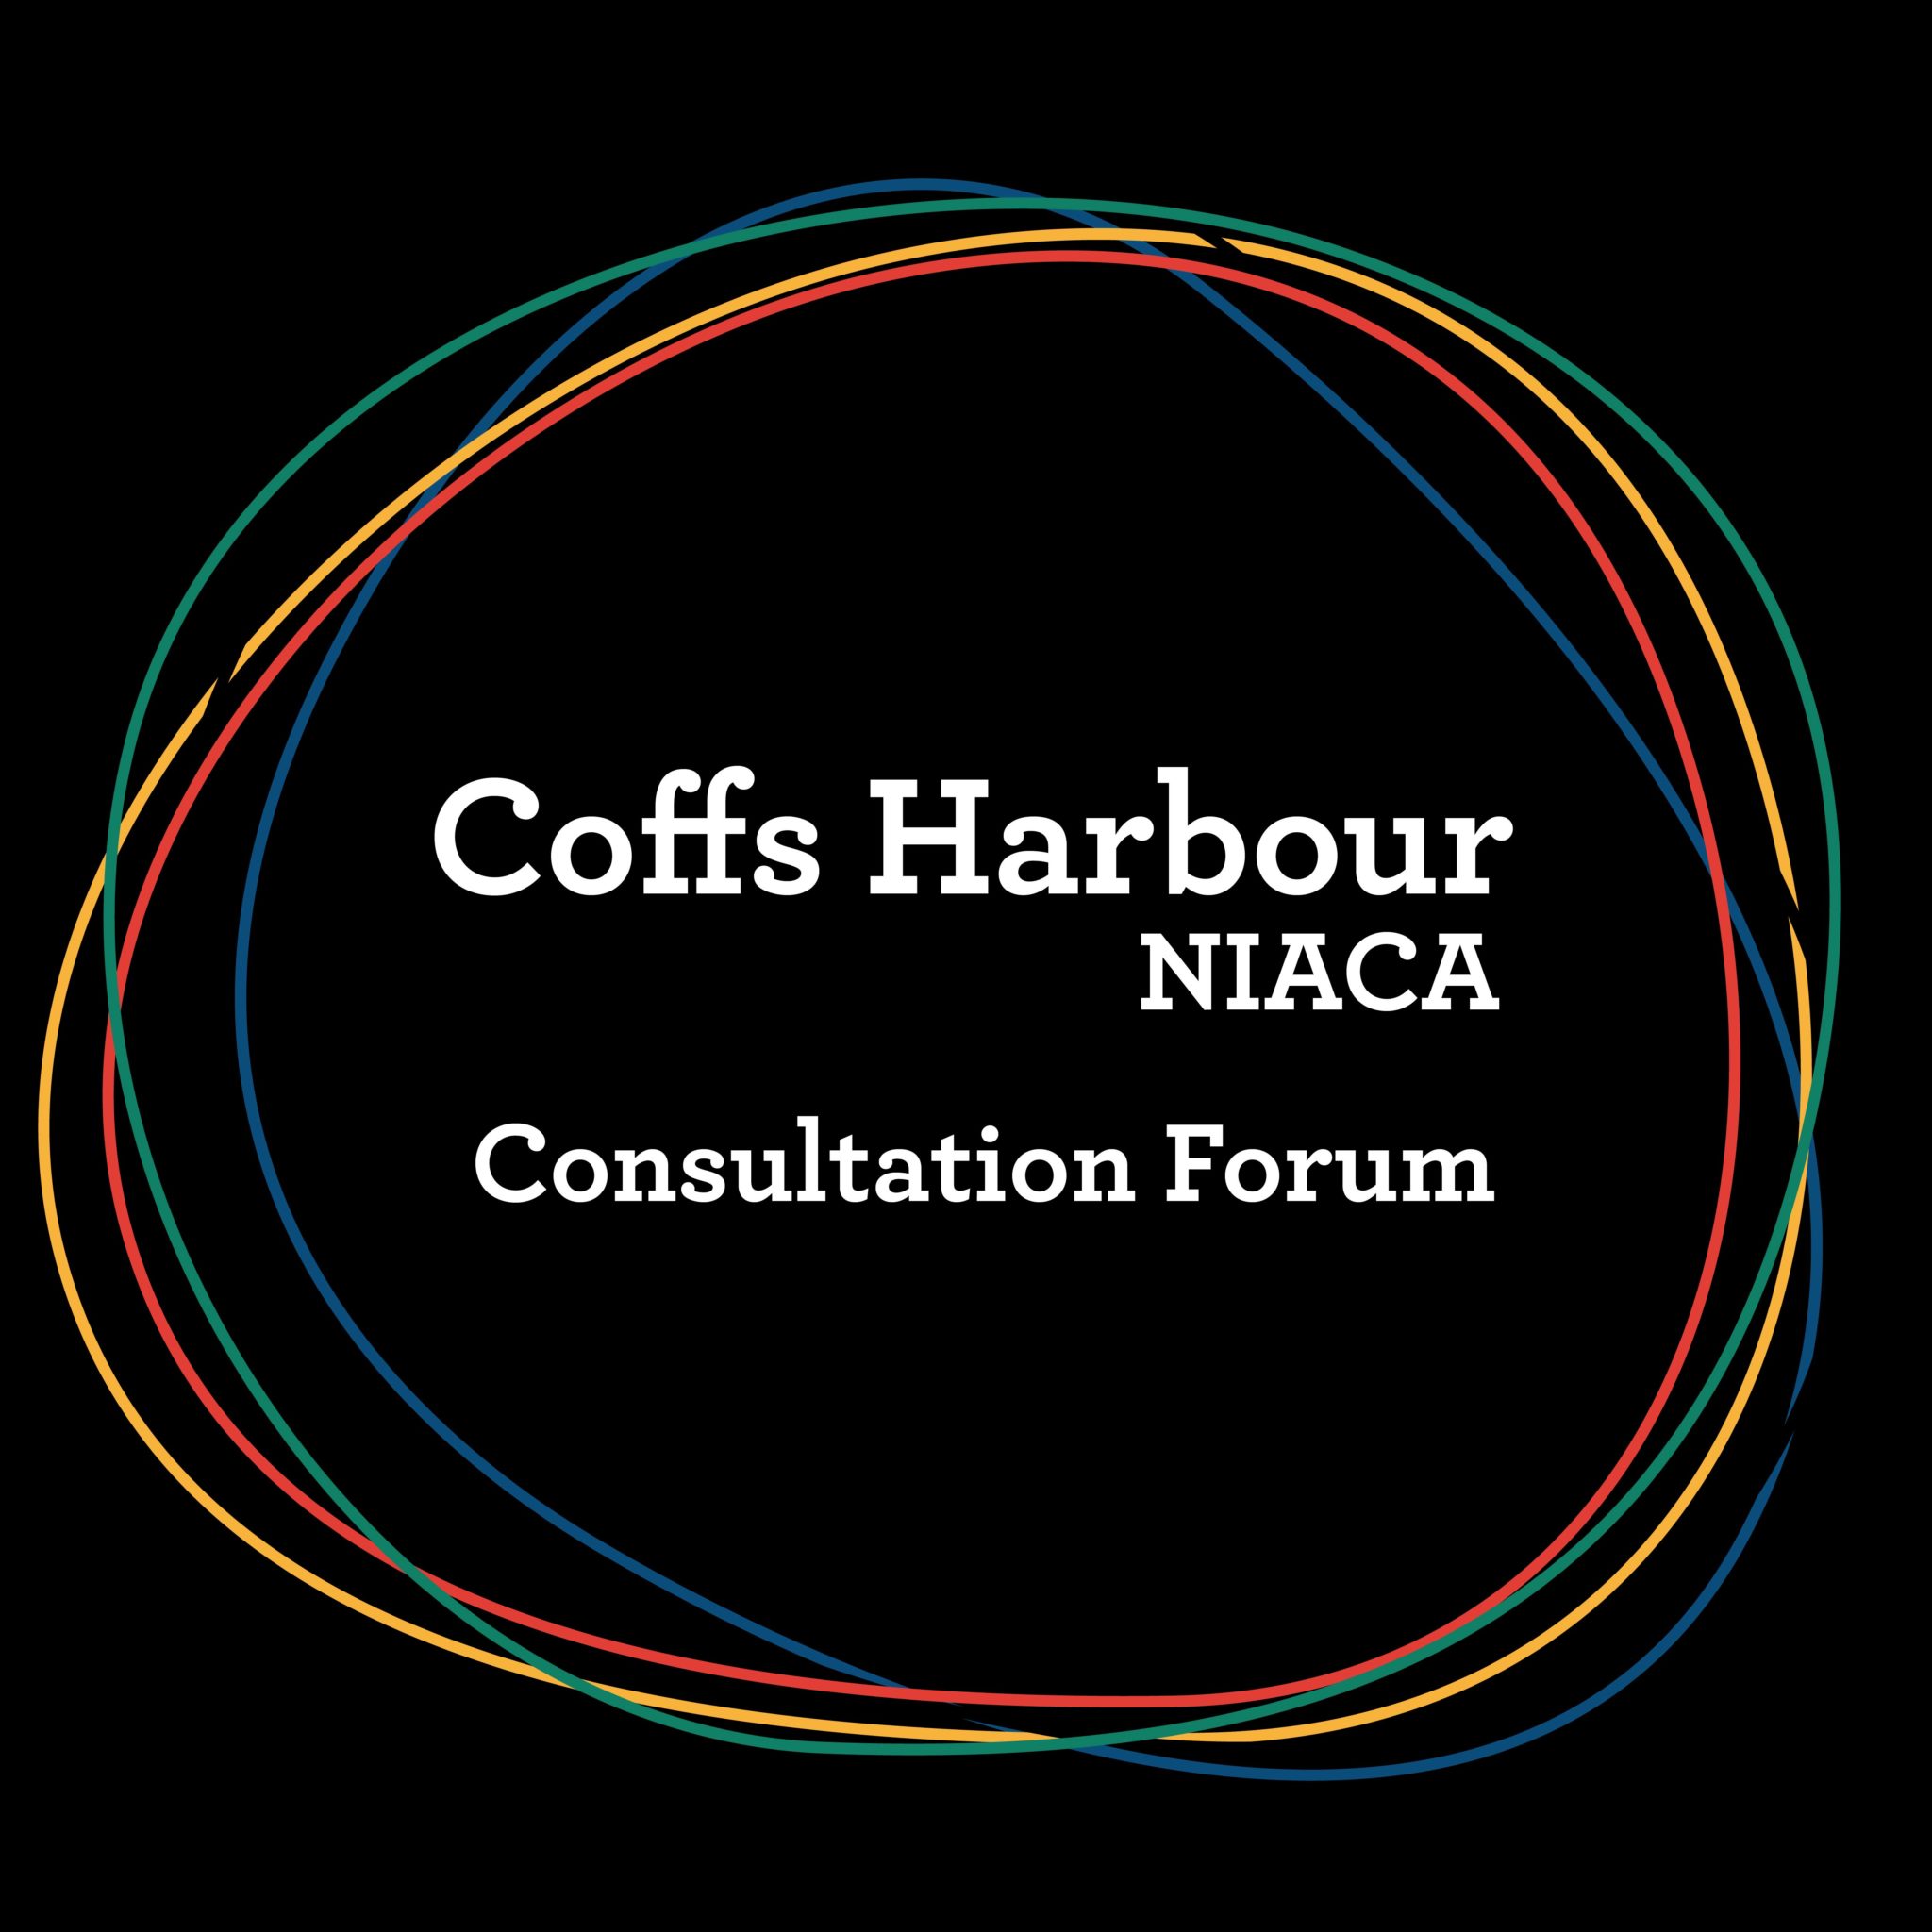 Coffs Harbour-NIACA Consultation Forum